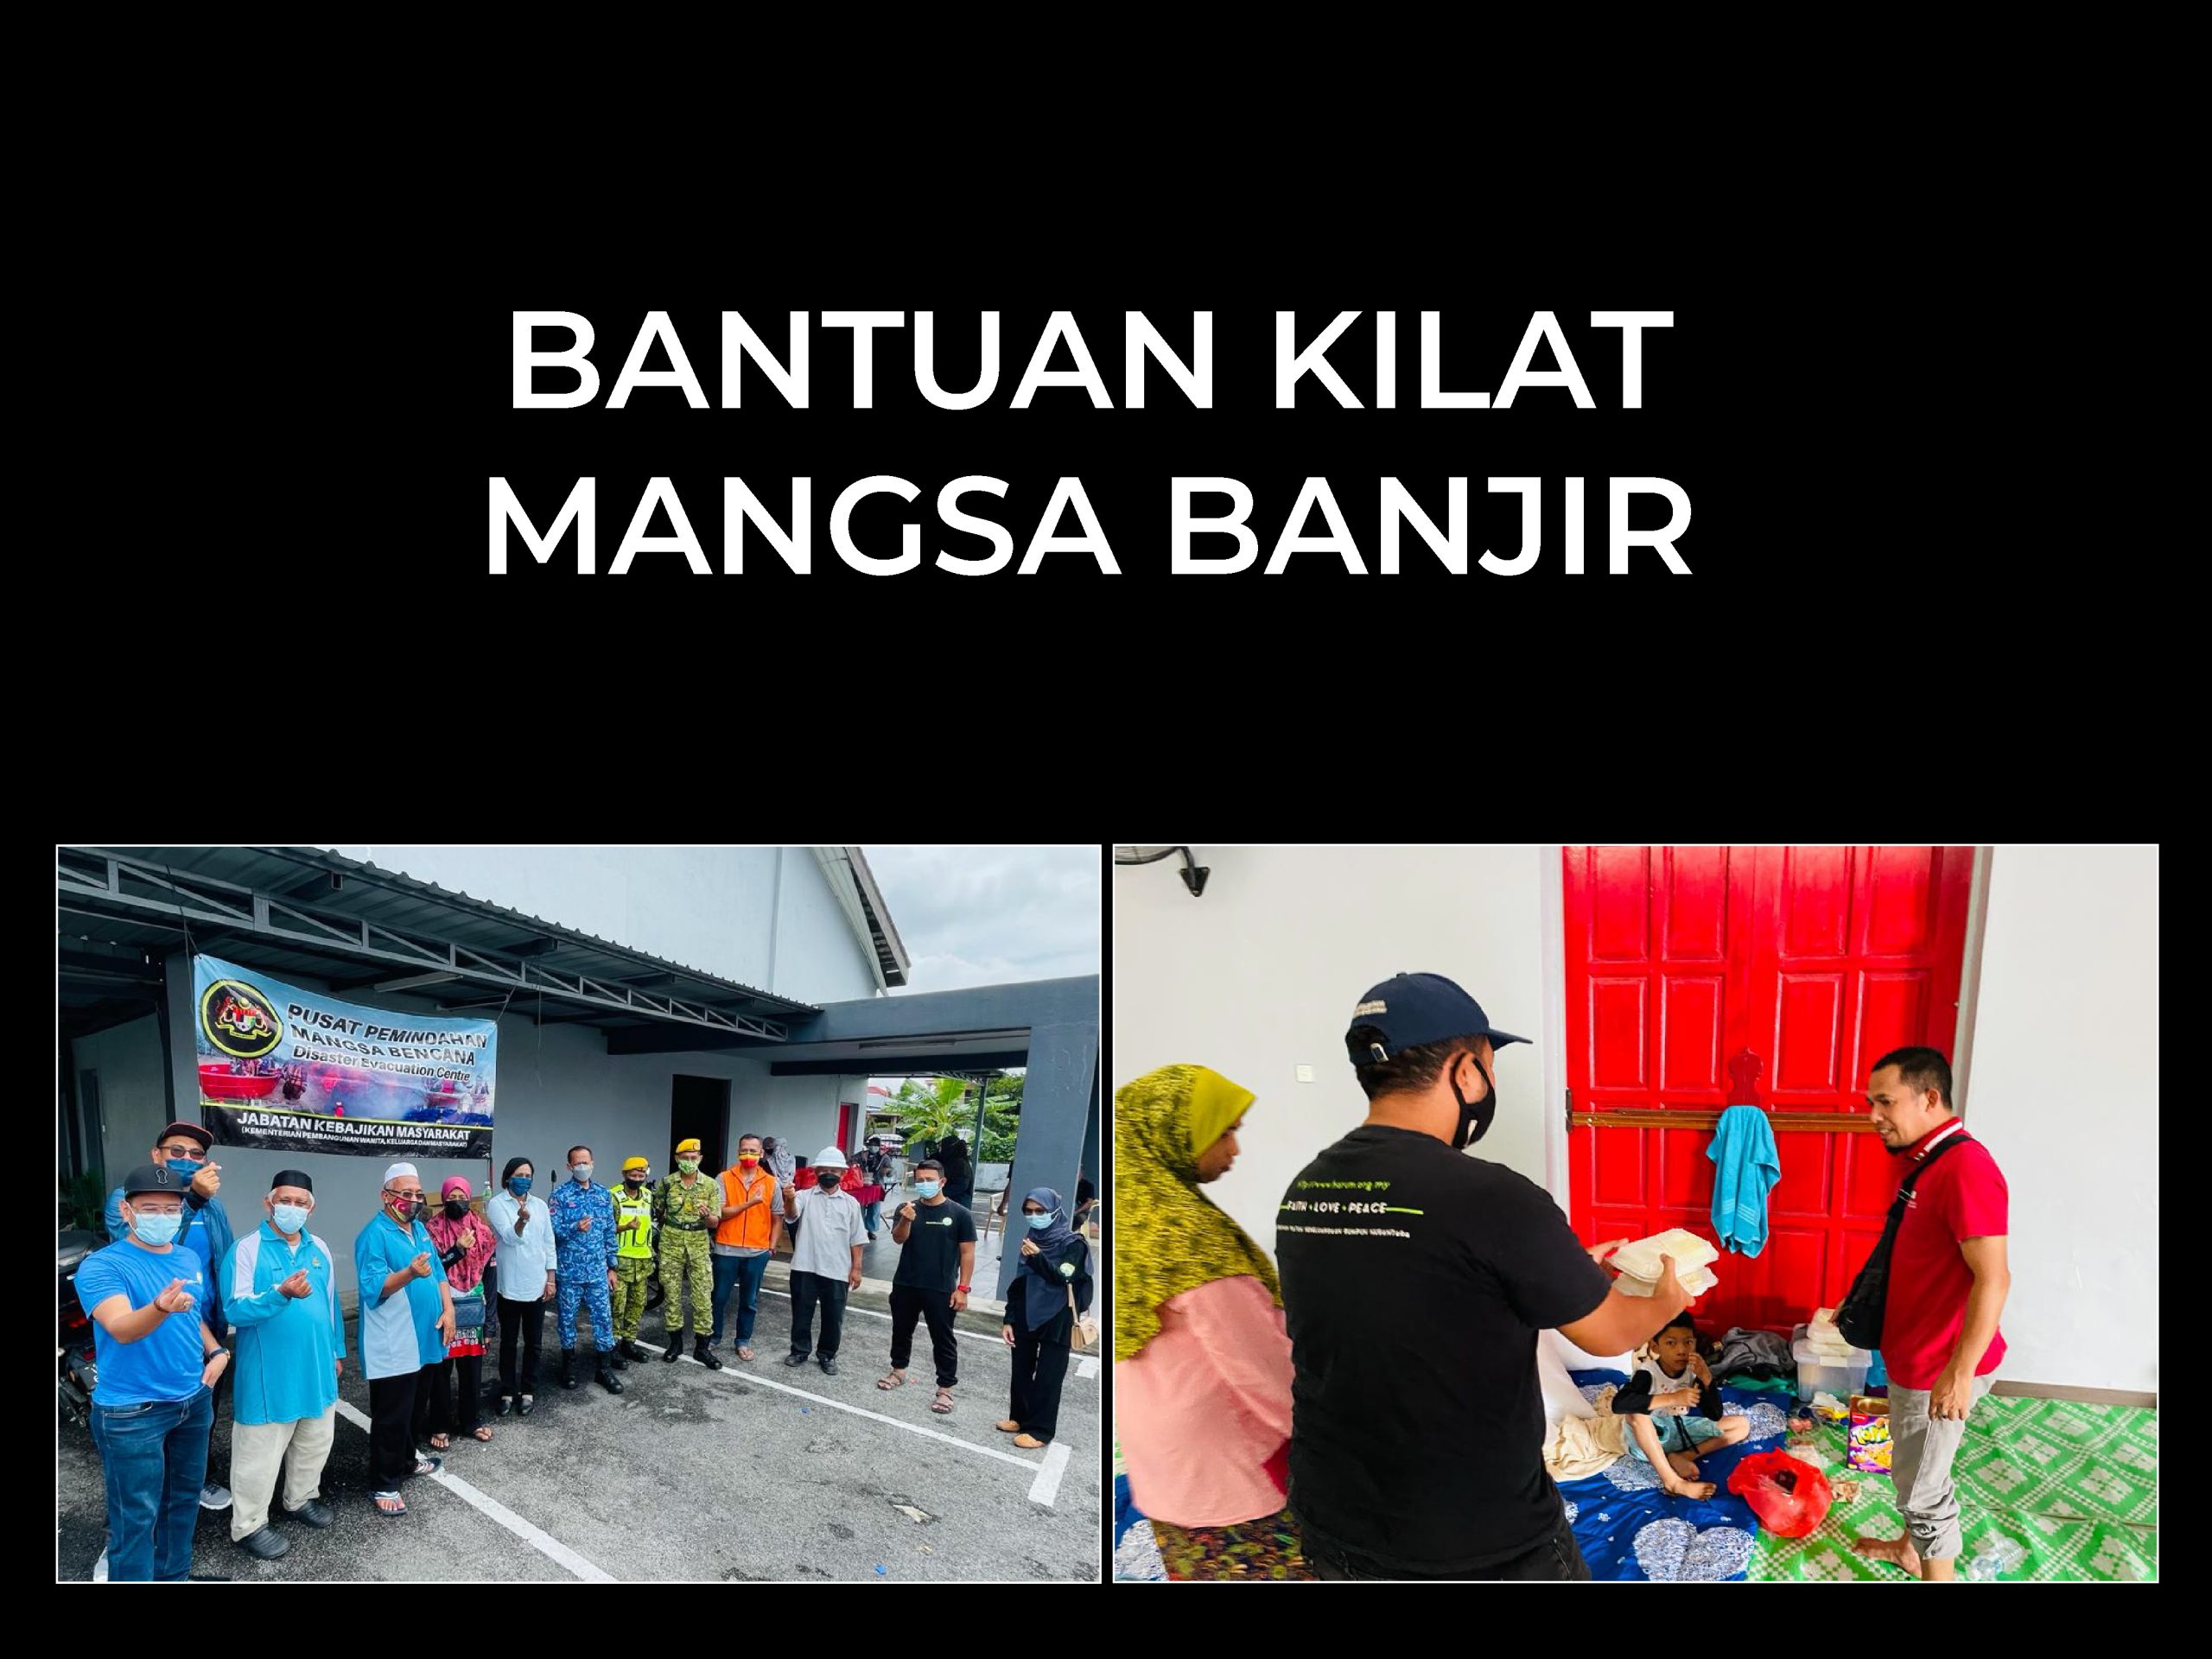 Bantuan Kilat Mangsa Banjir Di Kampung Melayu Subang Dan Kg Bukit Lanchong, Puchong